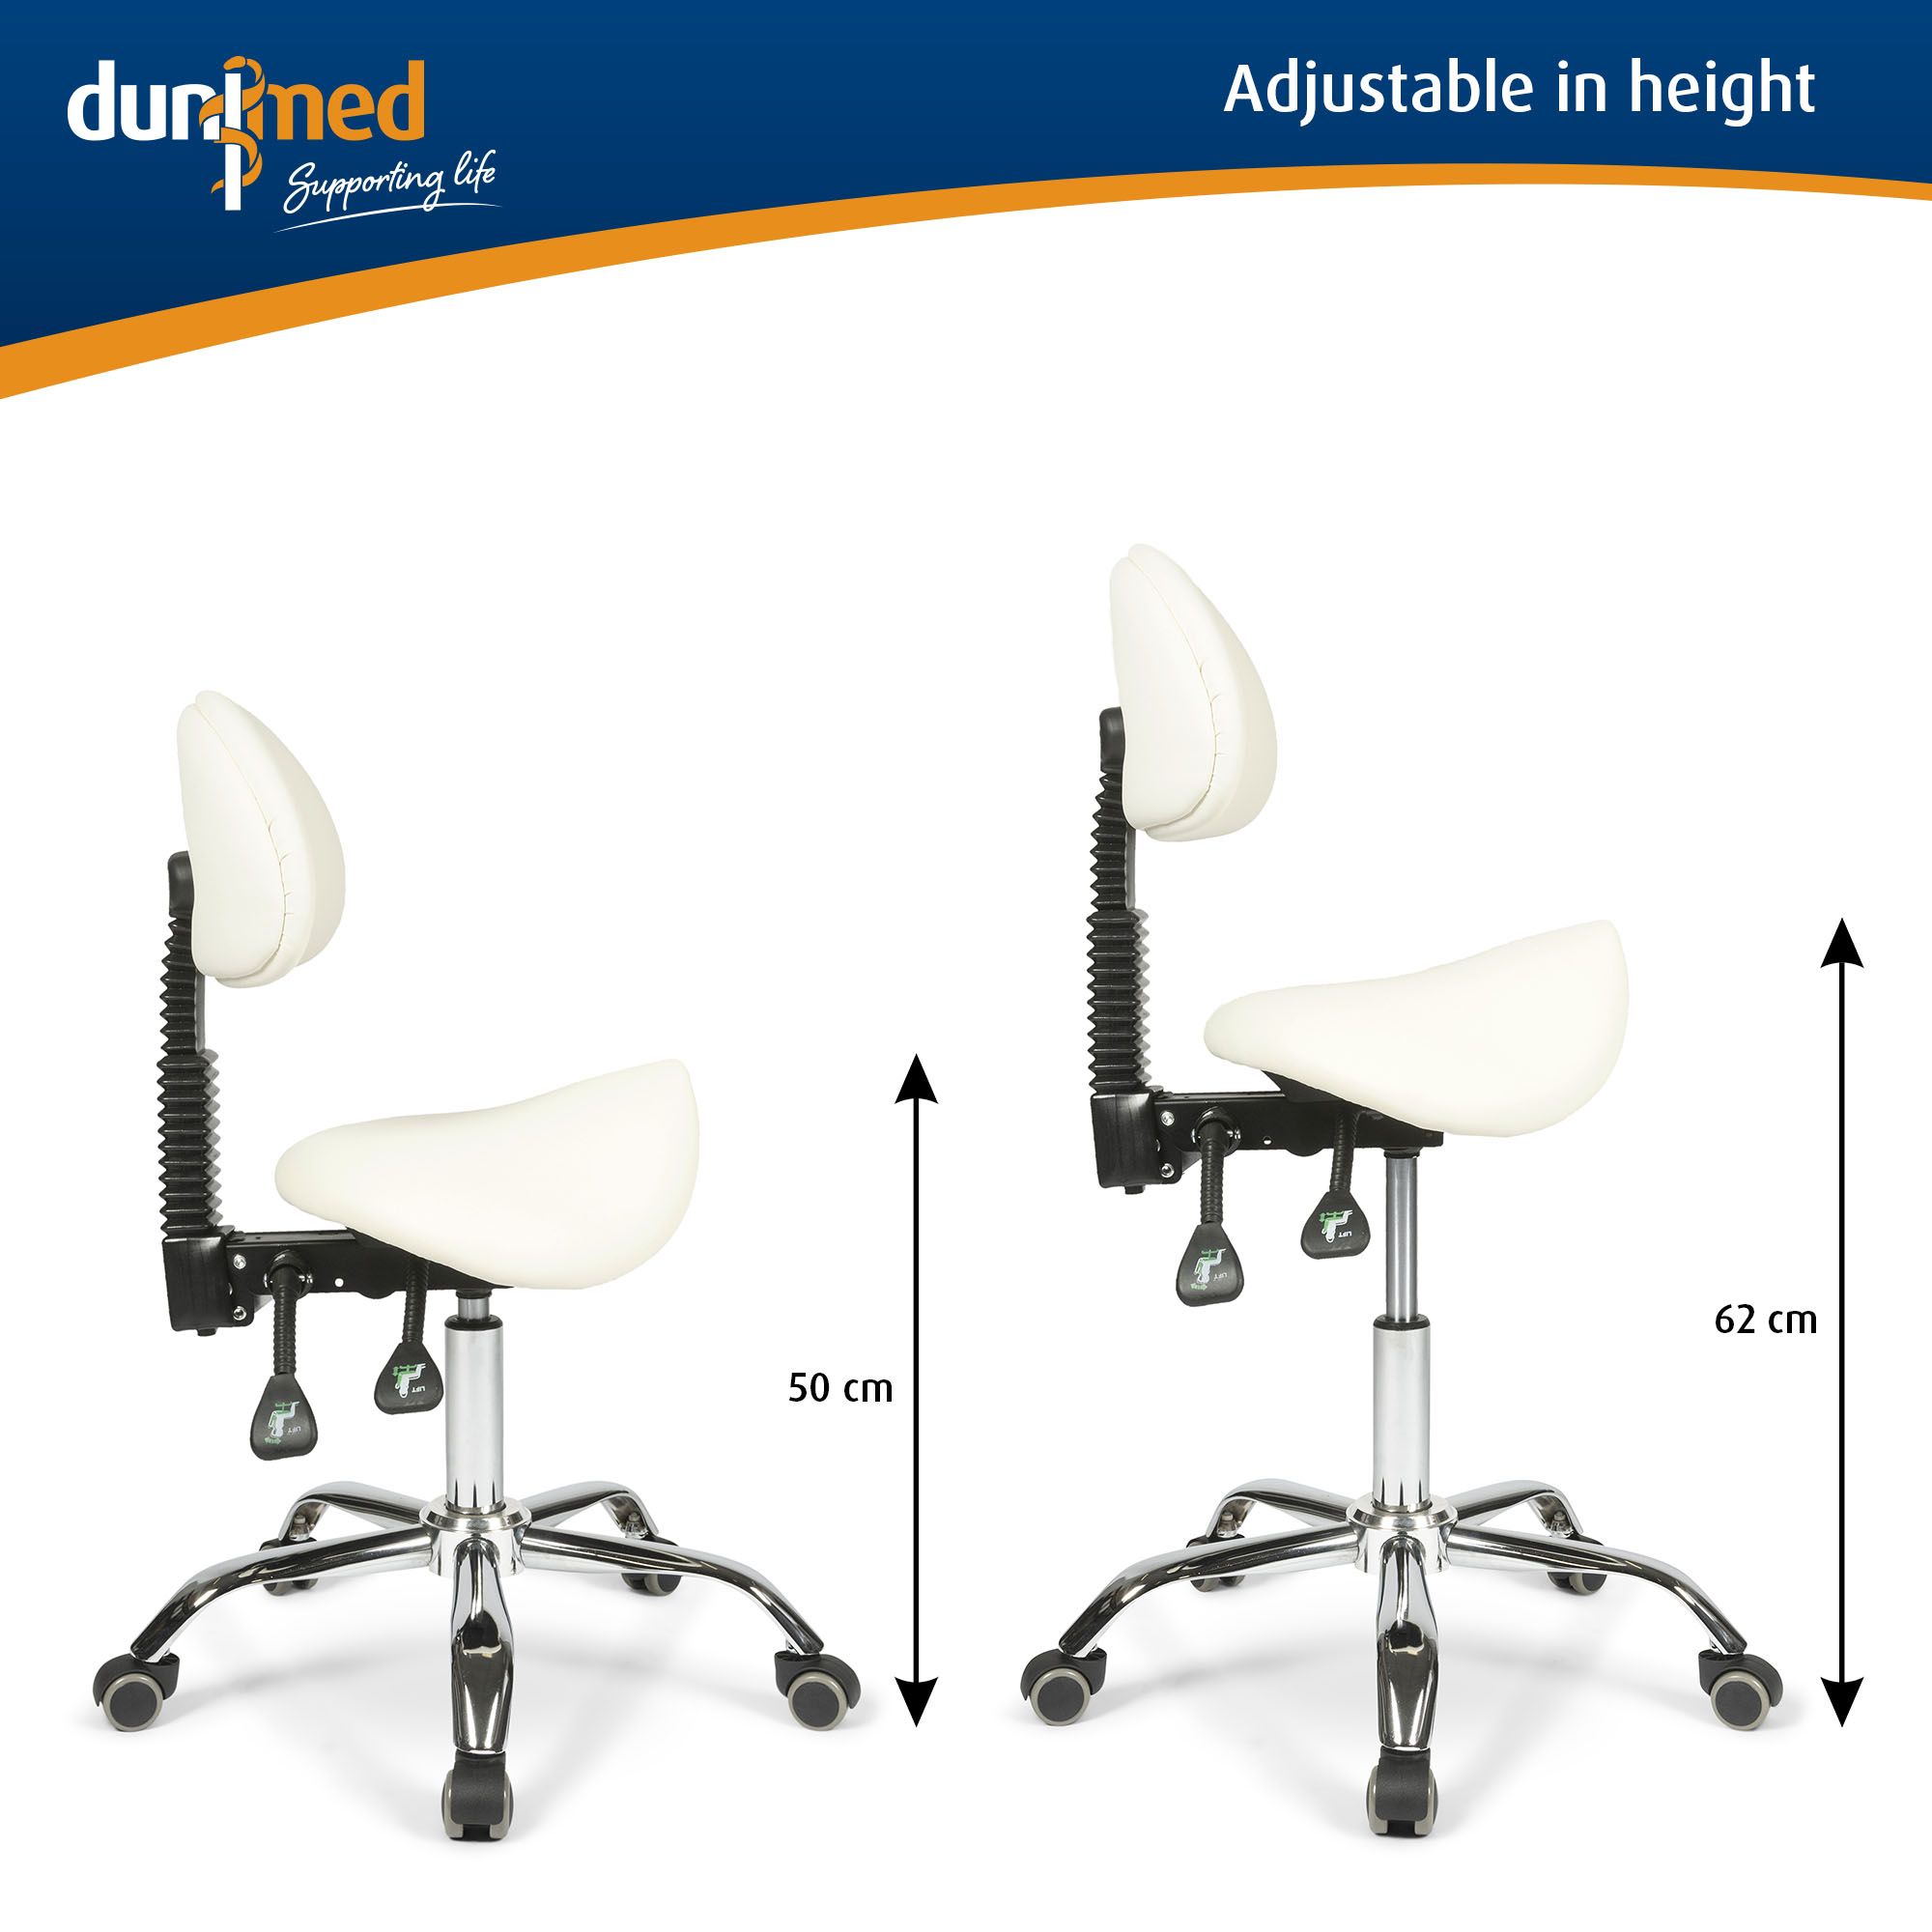 dunimed ergonomic saddle stool with backrest white adjustable in height